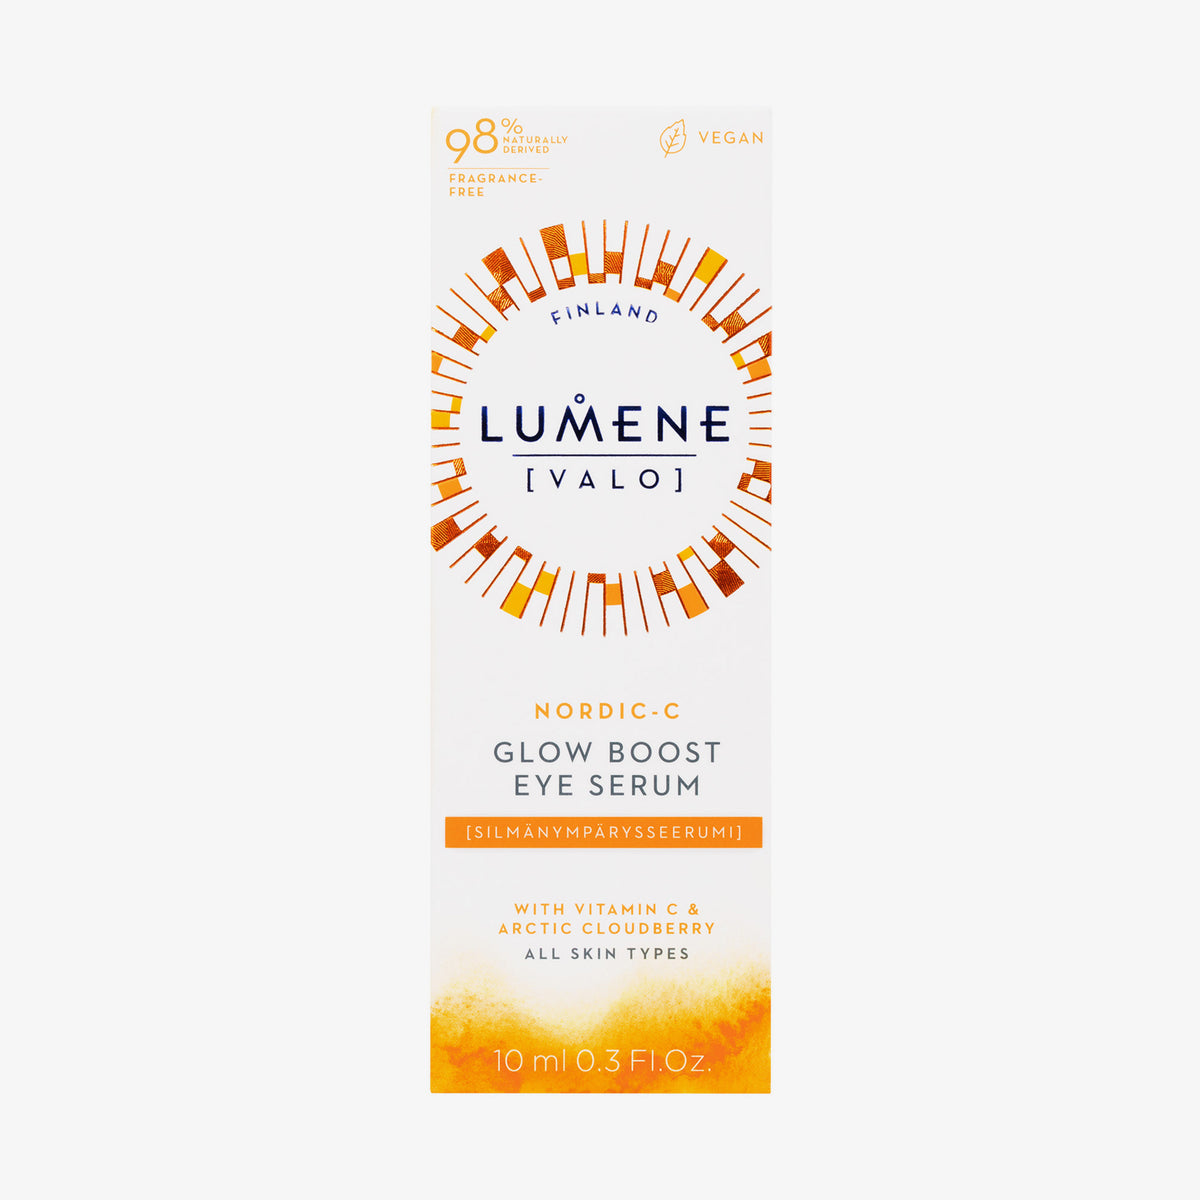 Lumene | NORDIC-C [VALO] Glow Boost Eye Serum